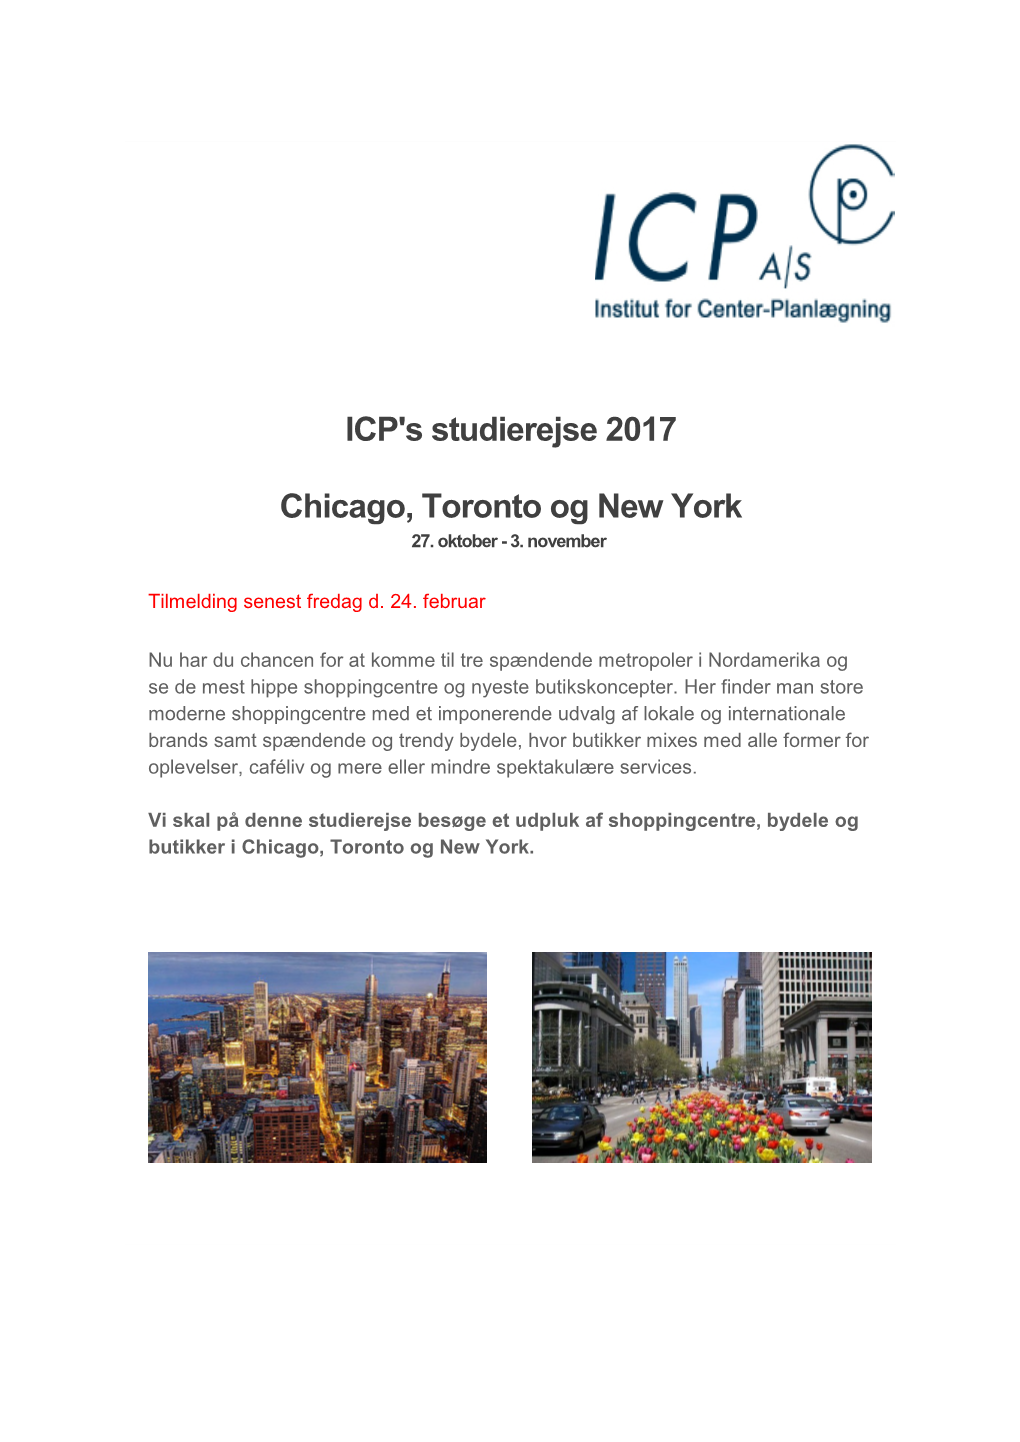 ICP's Studierejse 2017 Chicago, Toronto Og New York